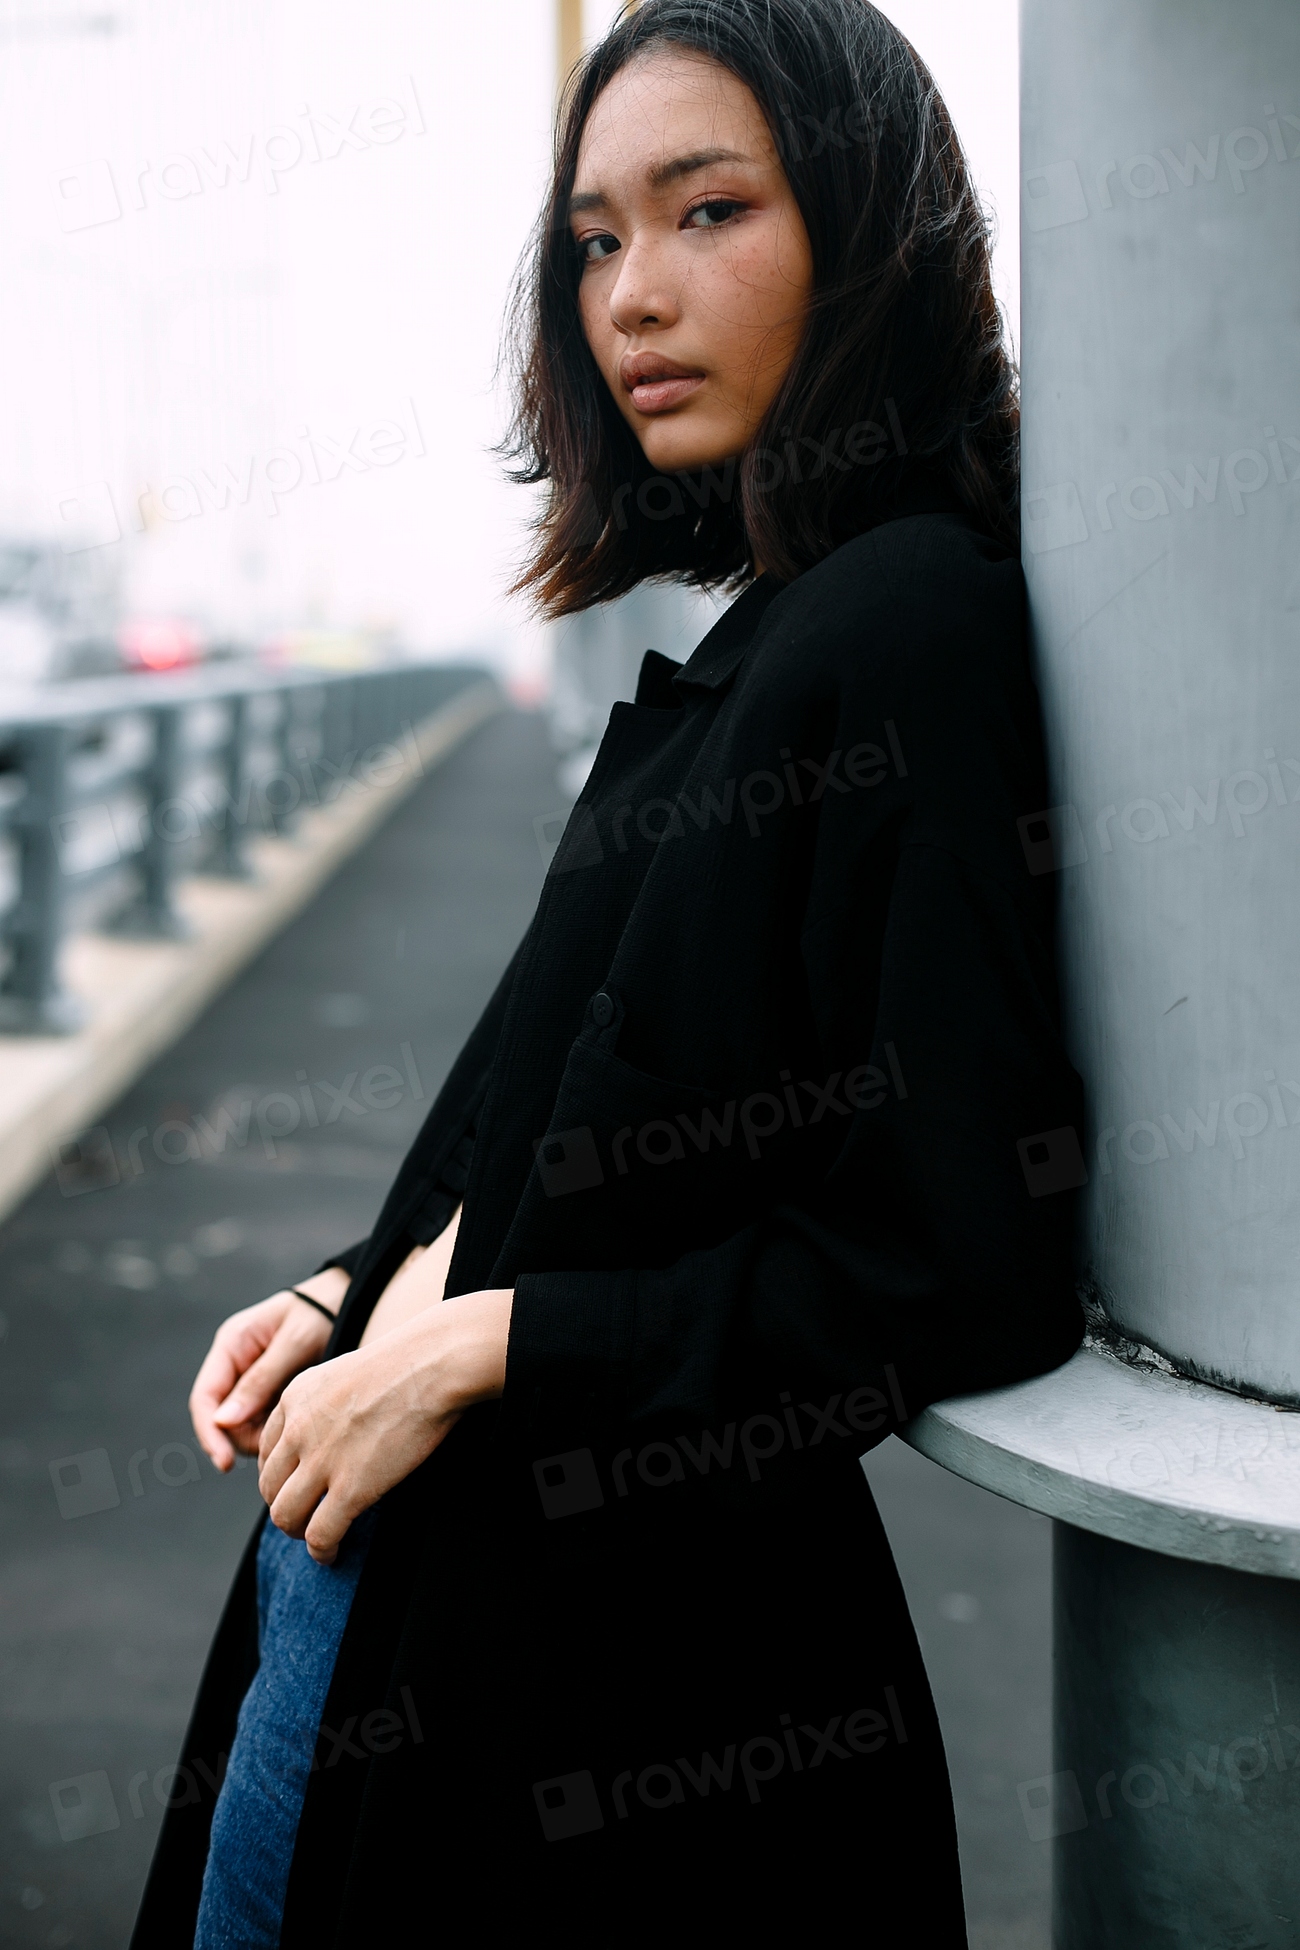 Asian woman in the city | Premium Photo - rawpixel